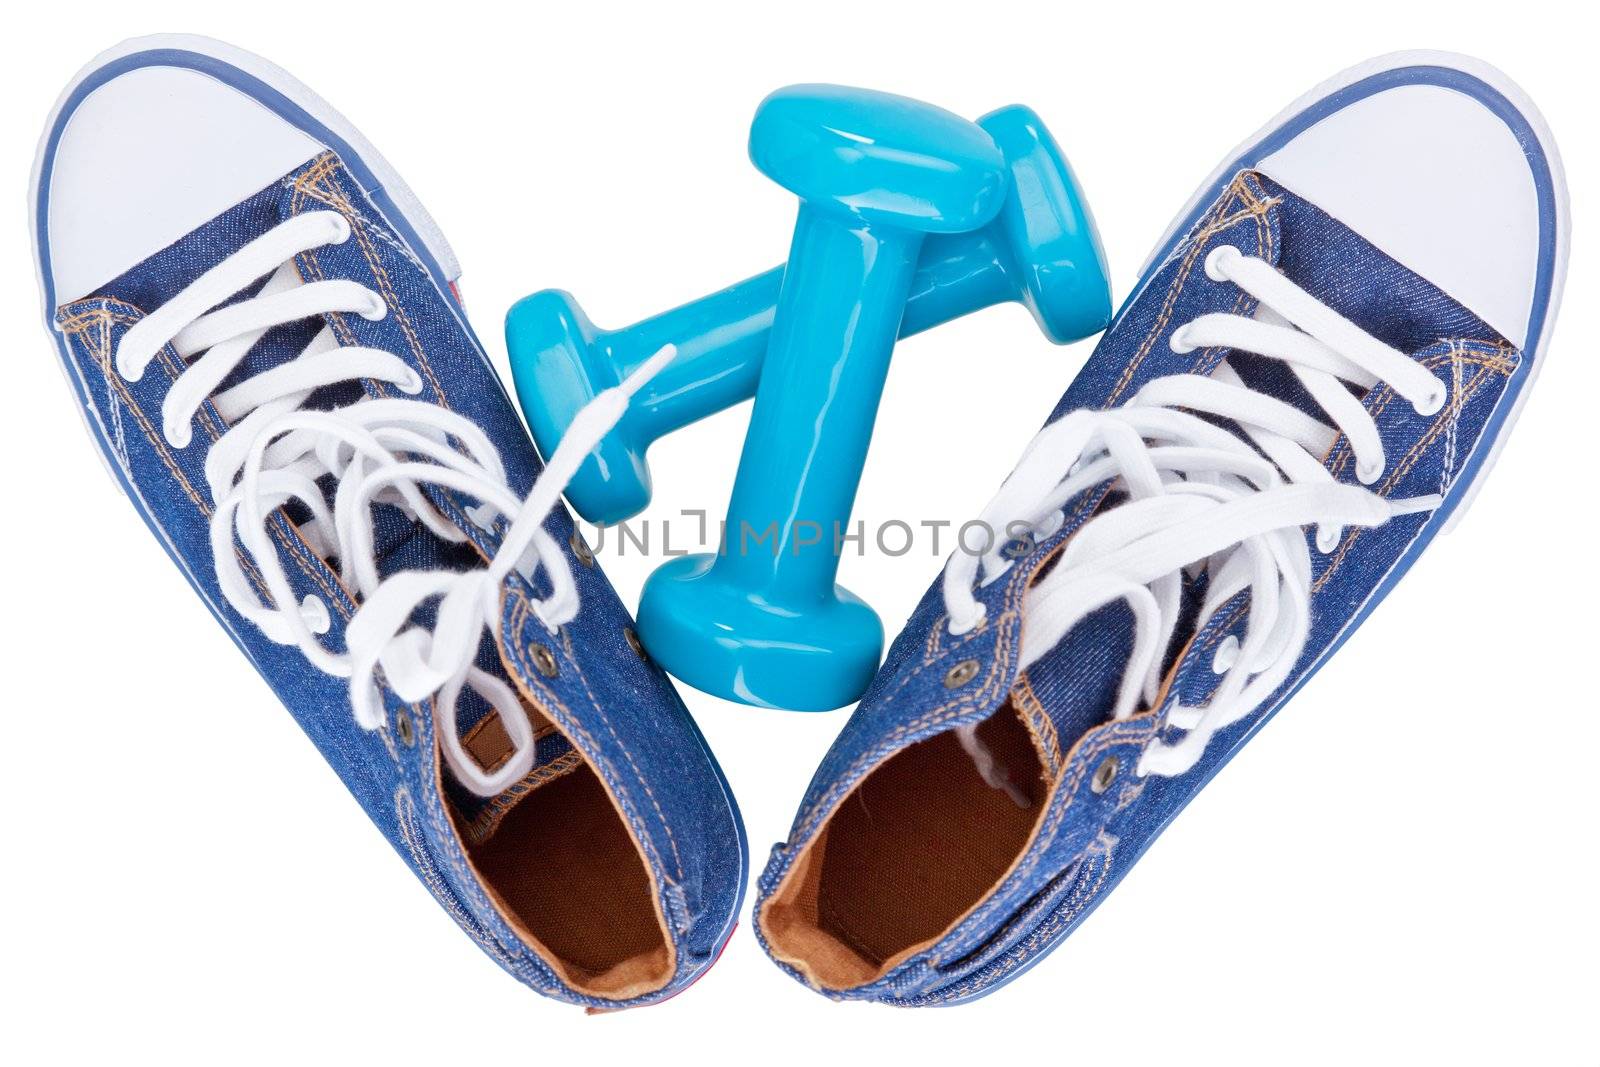 gumshoes, tennis shoes by Sergieiev